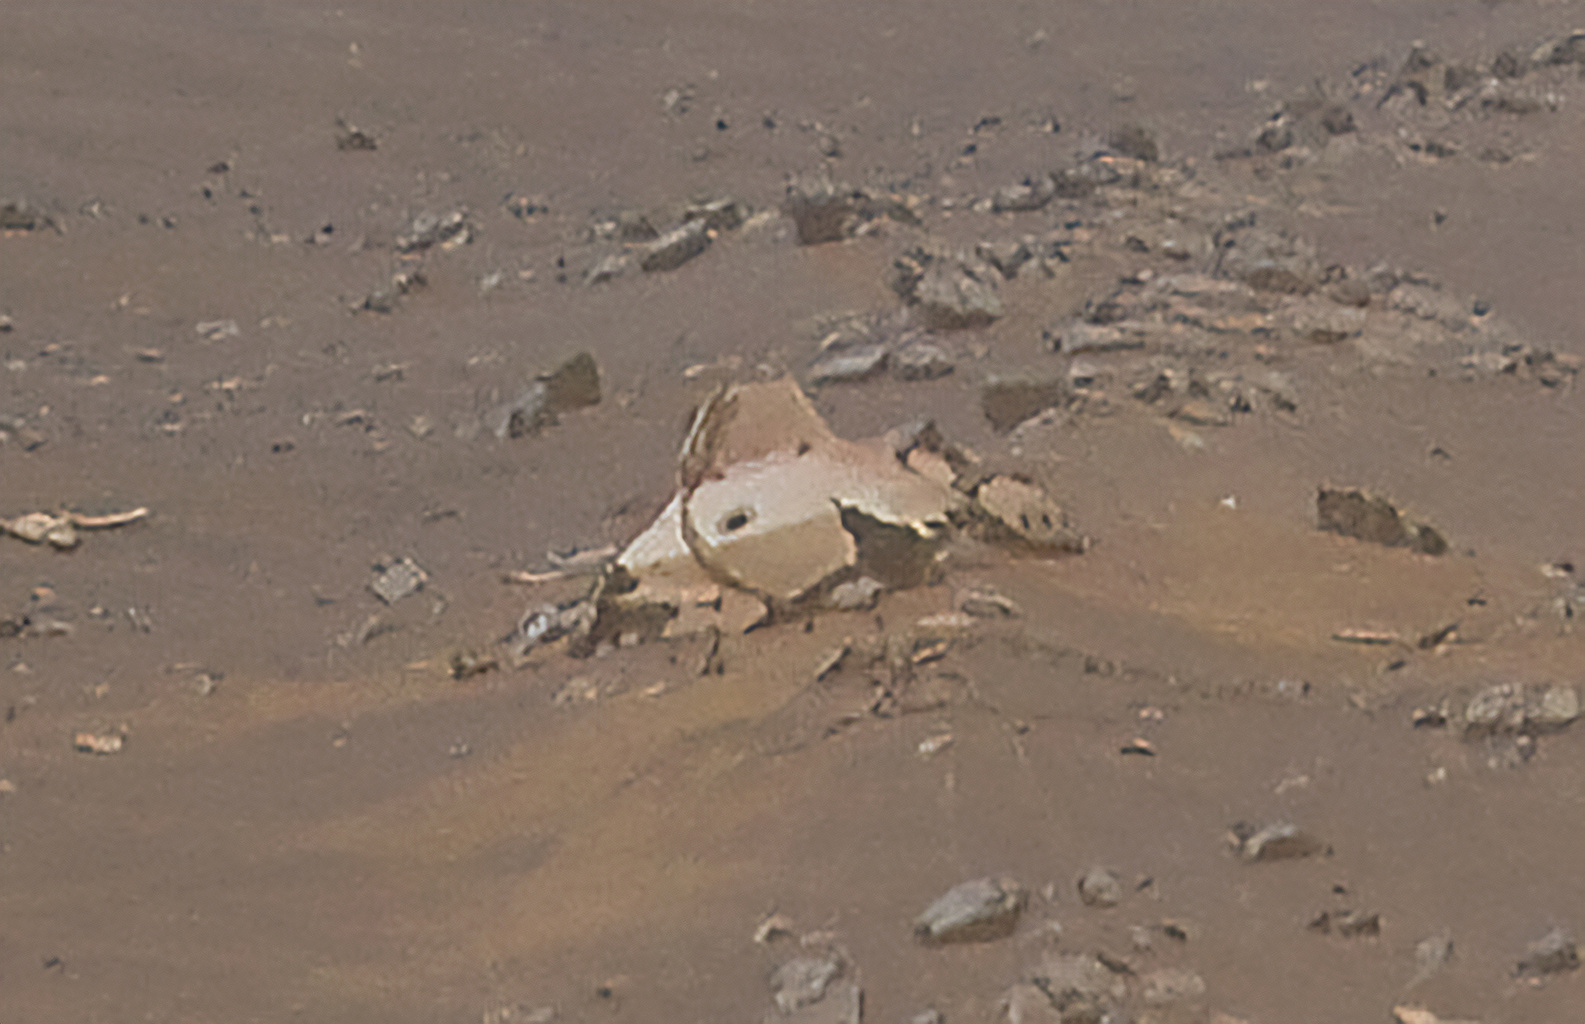 Mars 2020 (Perseverance - Ingenuity) : exploration du cratère Jezero - Page 27 Image116